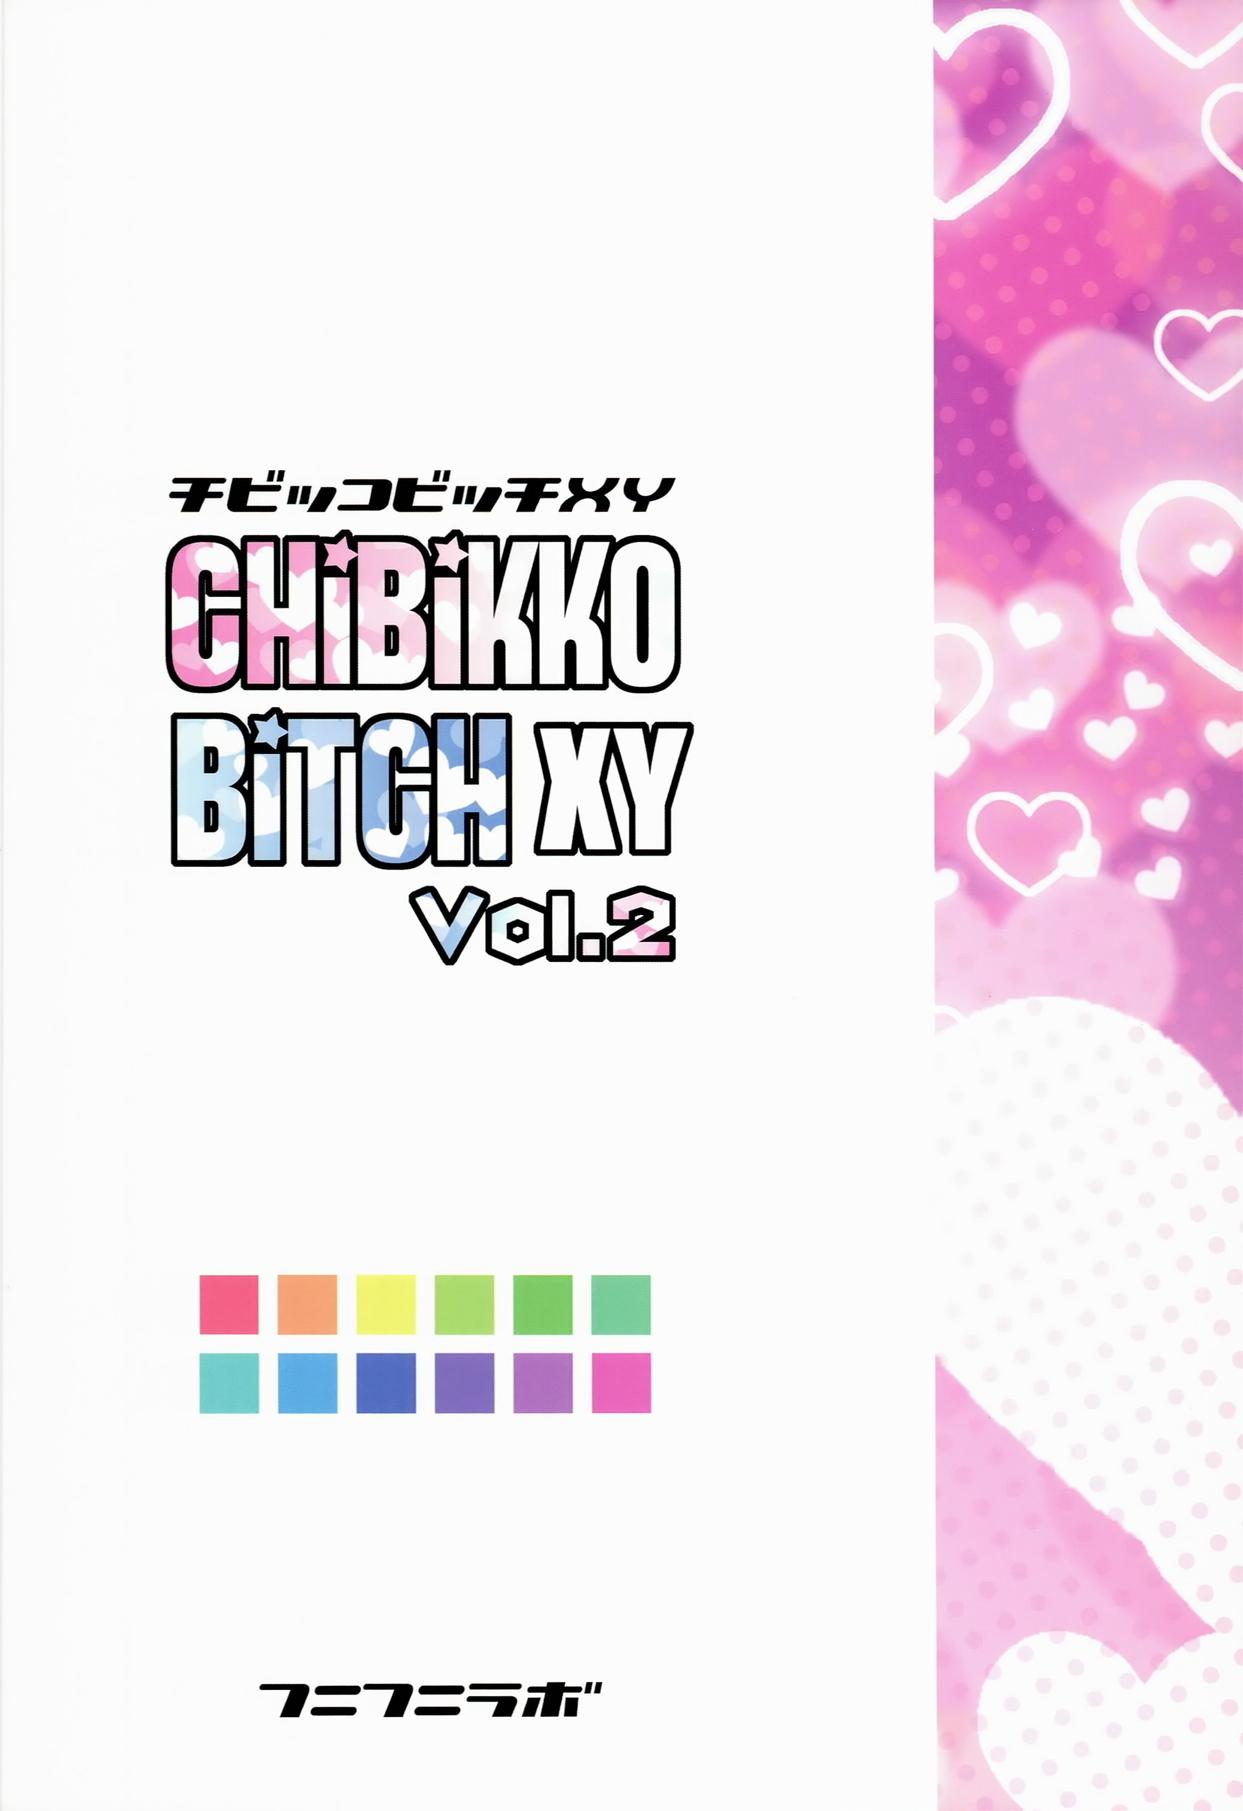 Chibikko Bitch XY 2 27